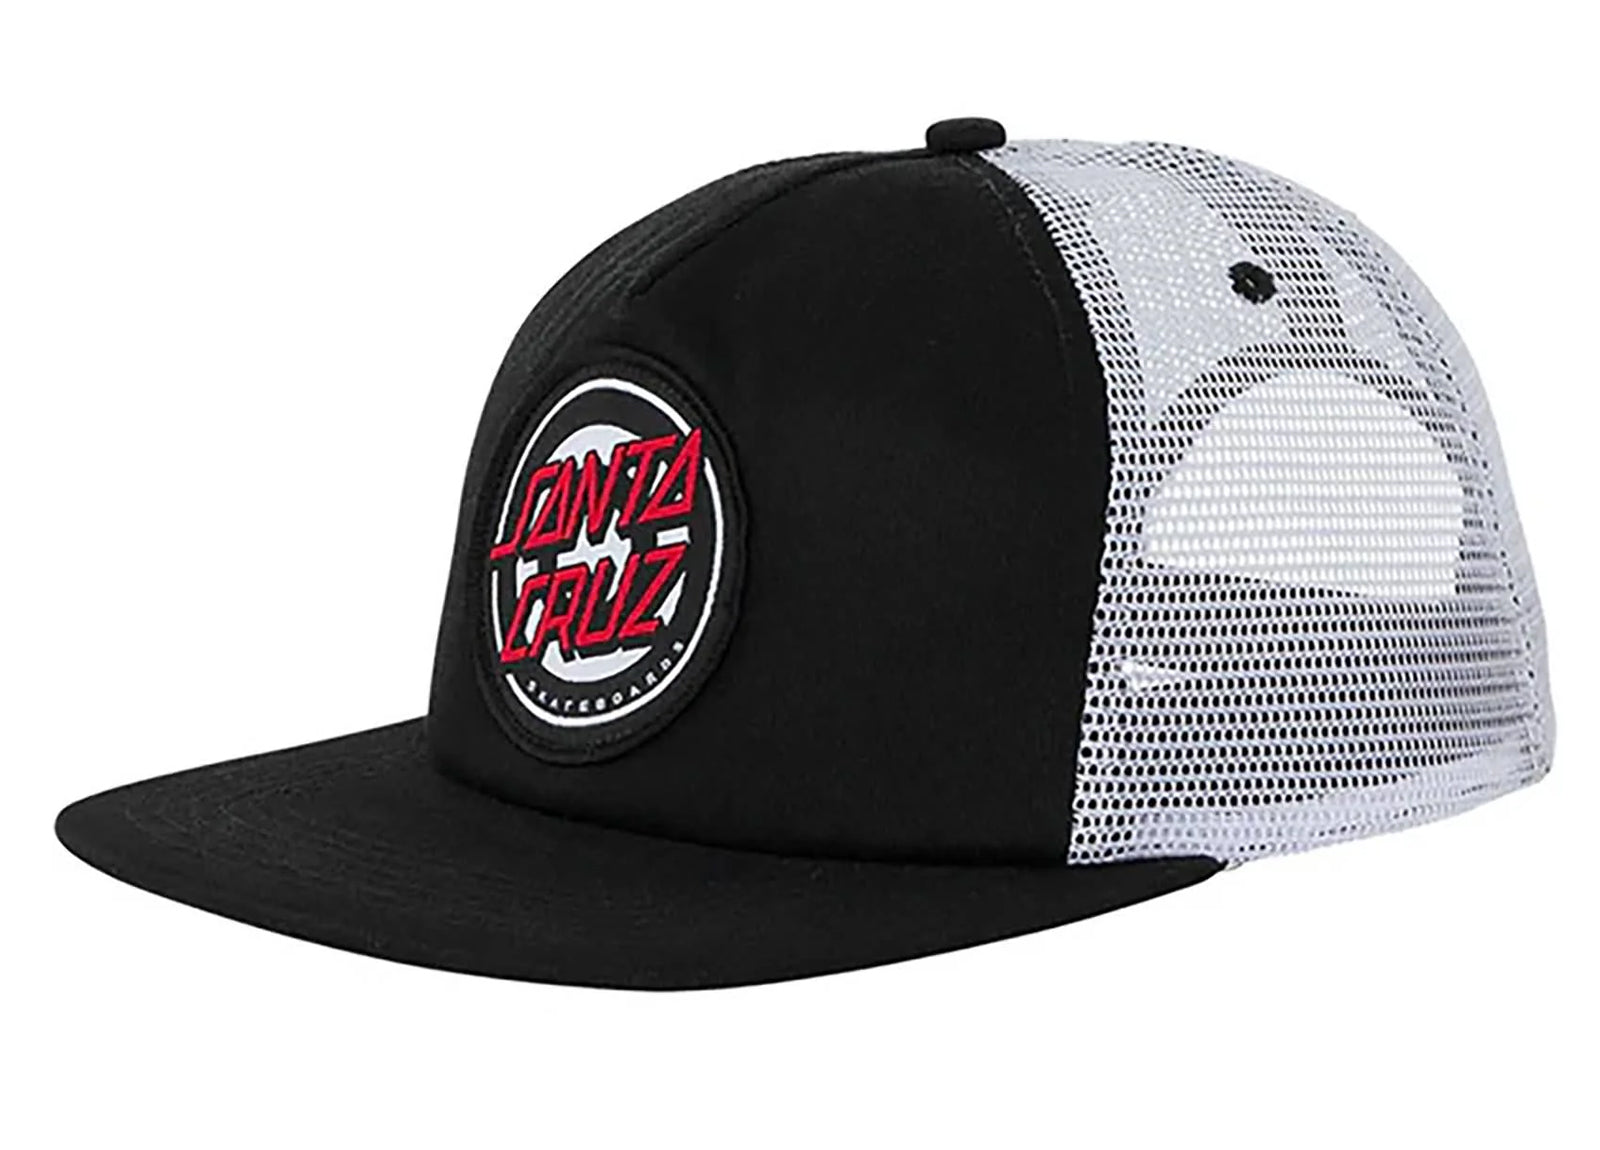 Santa Cruz Rob Target Dot Mesh Men's Trucker Adjustable Hats